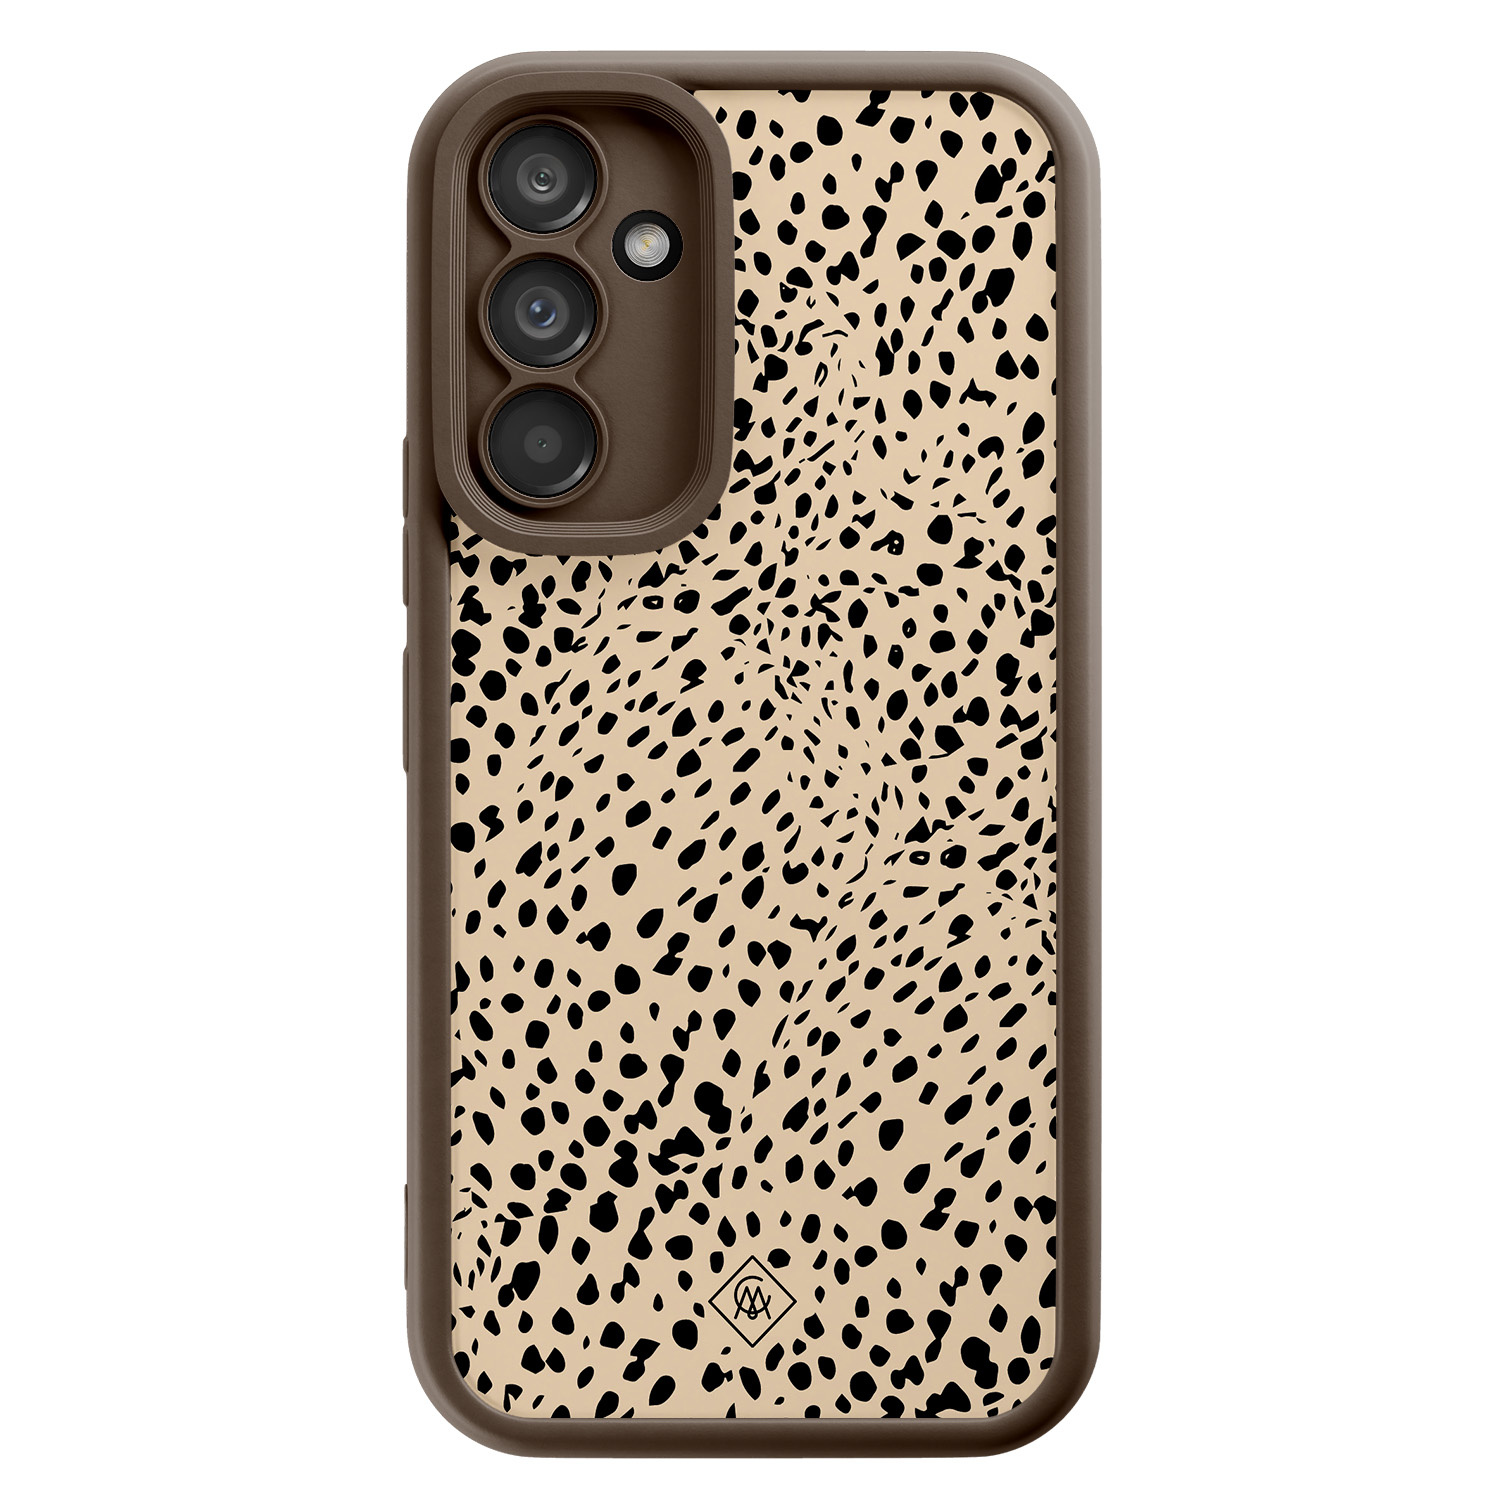 Samsung Galaxy A34 bruine case - Stippen bruin abstract - Bruin/beige - Hard Case TPU Zwart - Gestipt - Casimoda